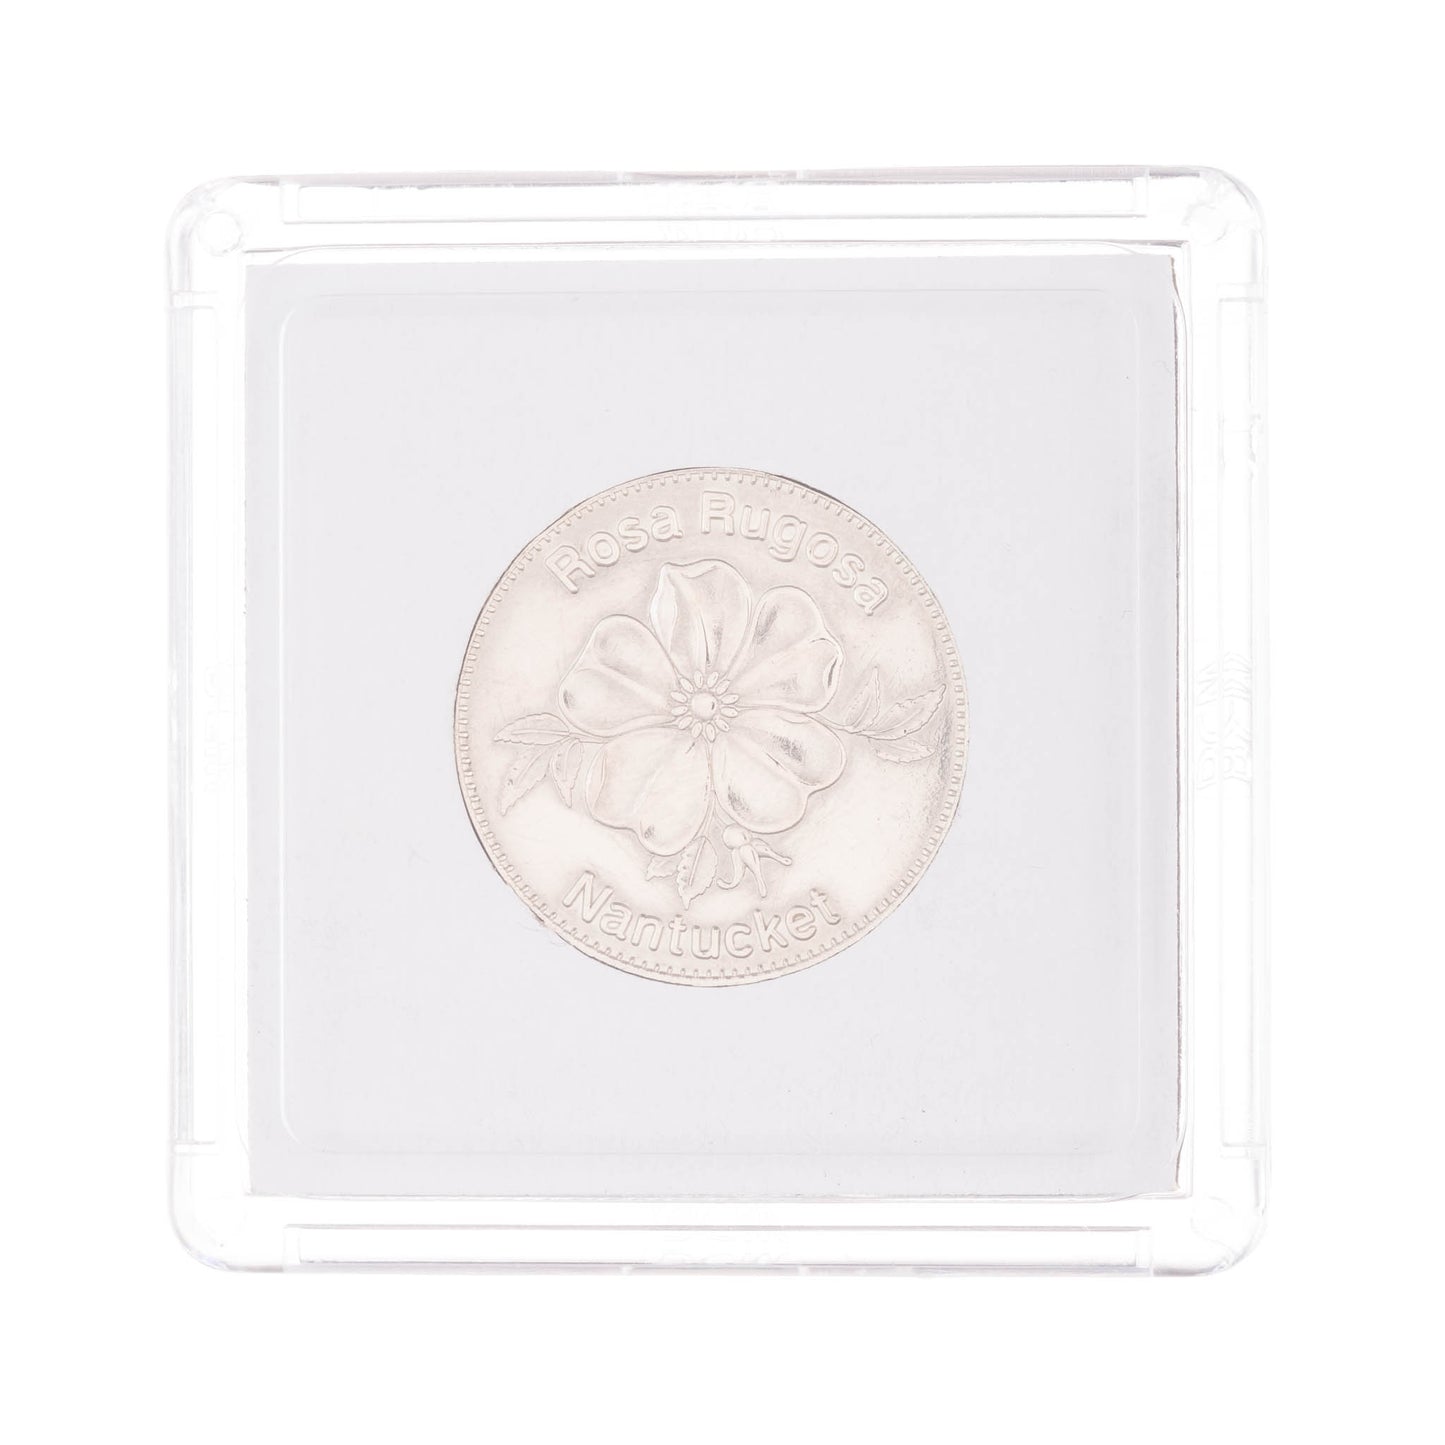 Commemorative Coin in Sterling Silver